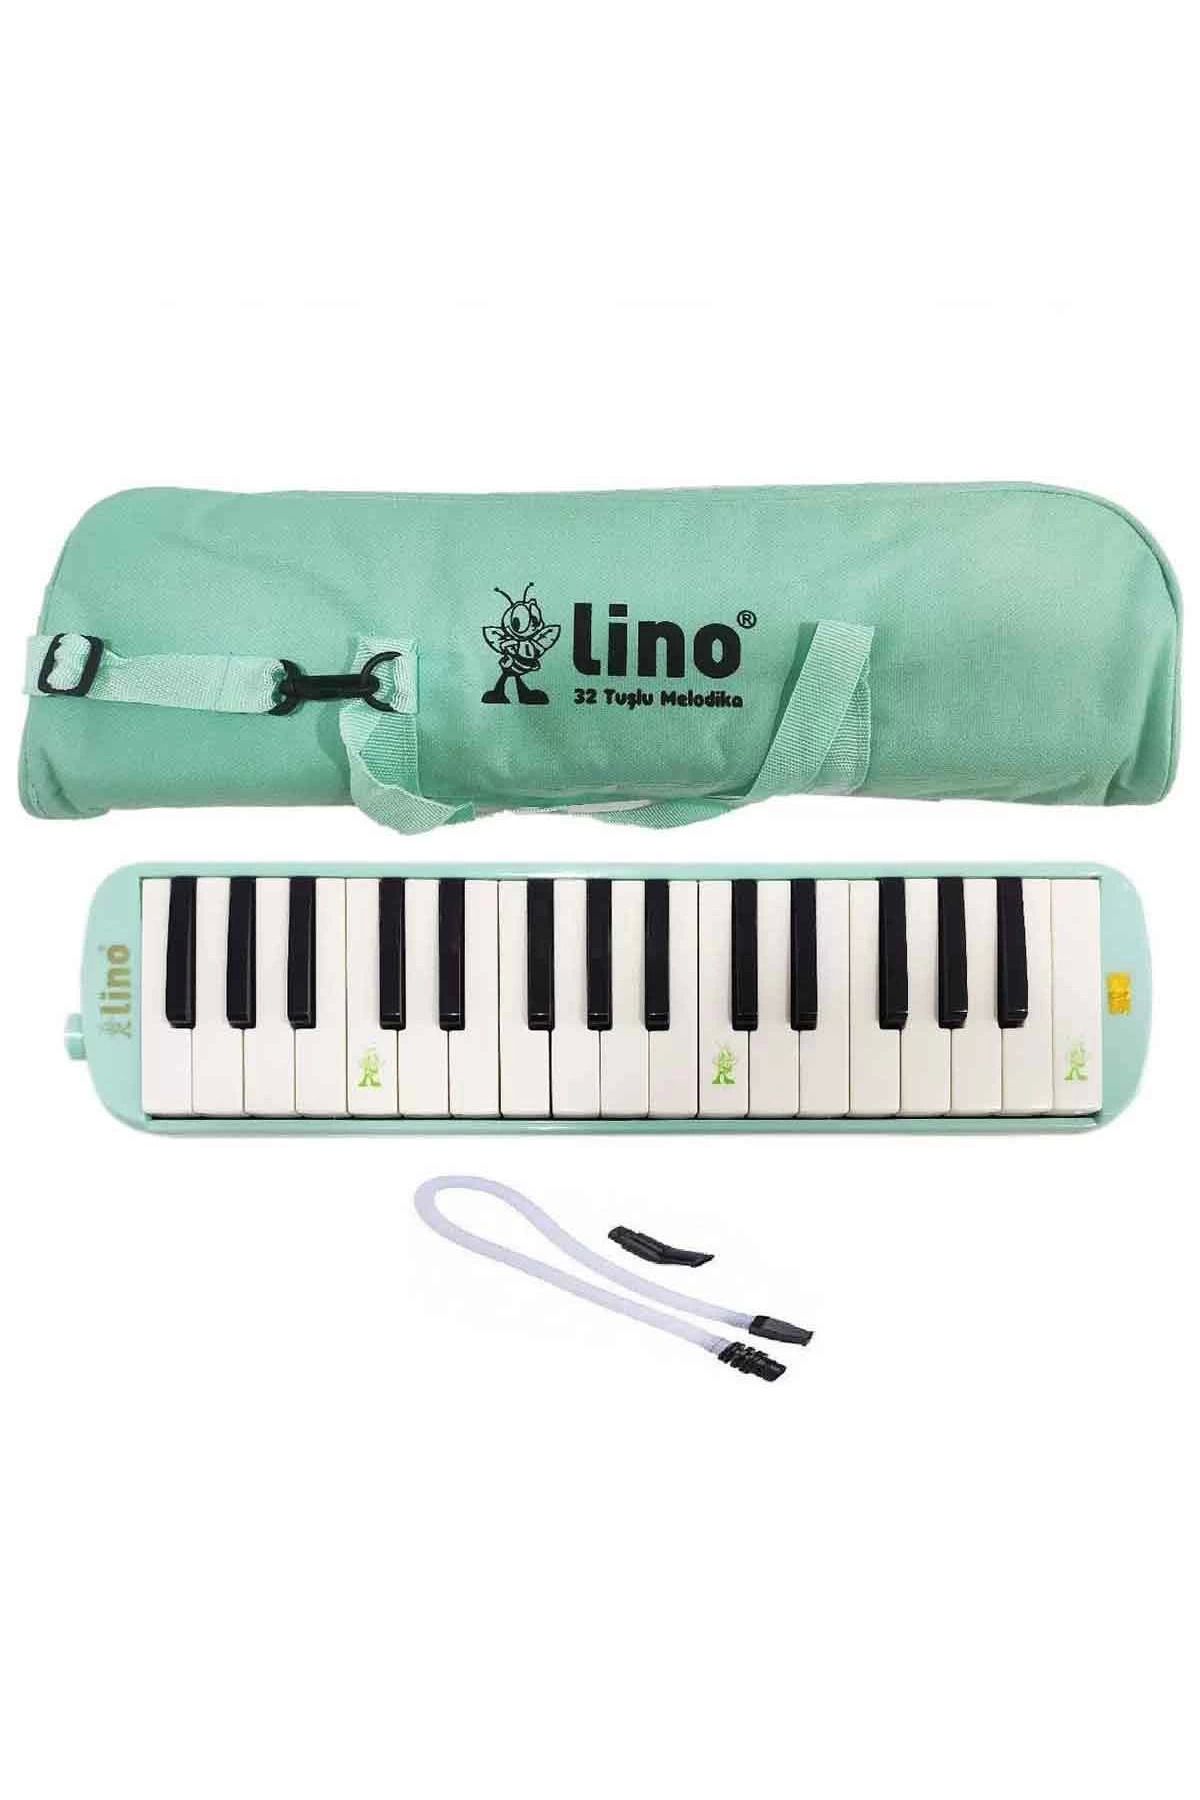 TimeStart Lino 32 Tuşlu Bez Çantalı Melodika Pastel Yeşil